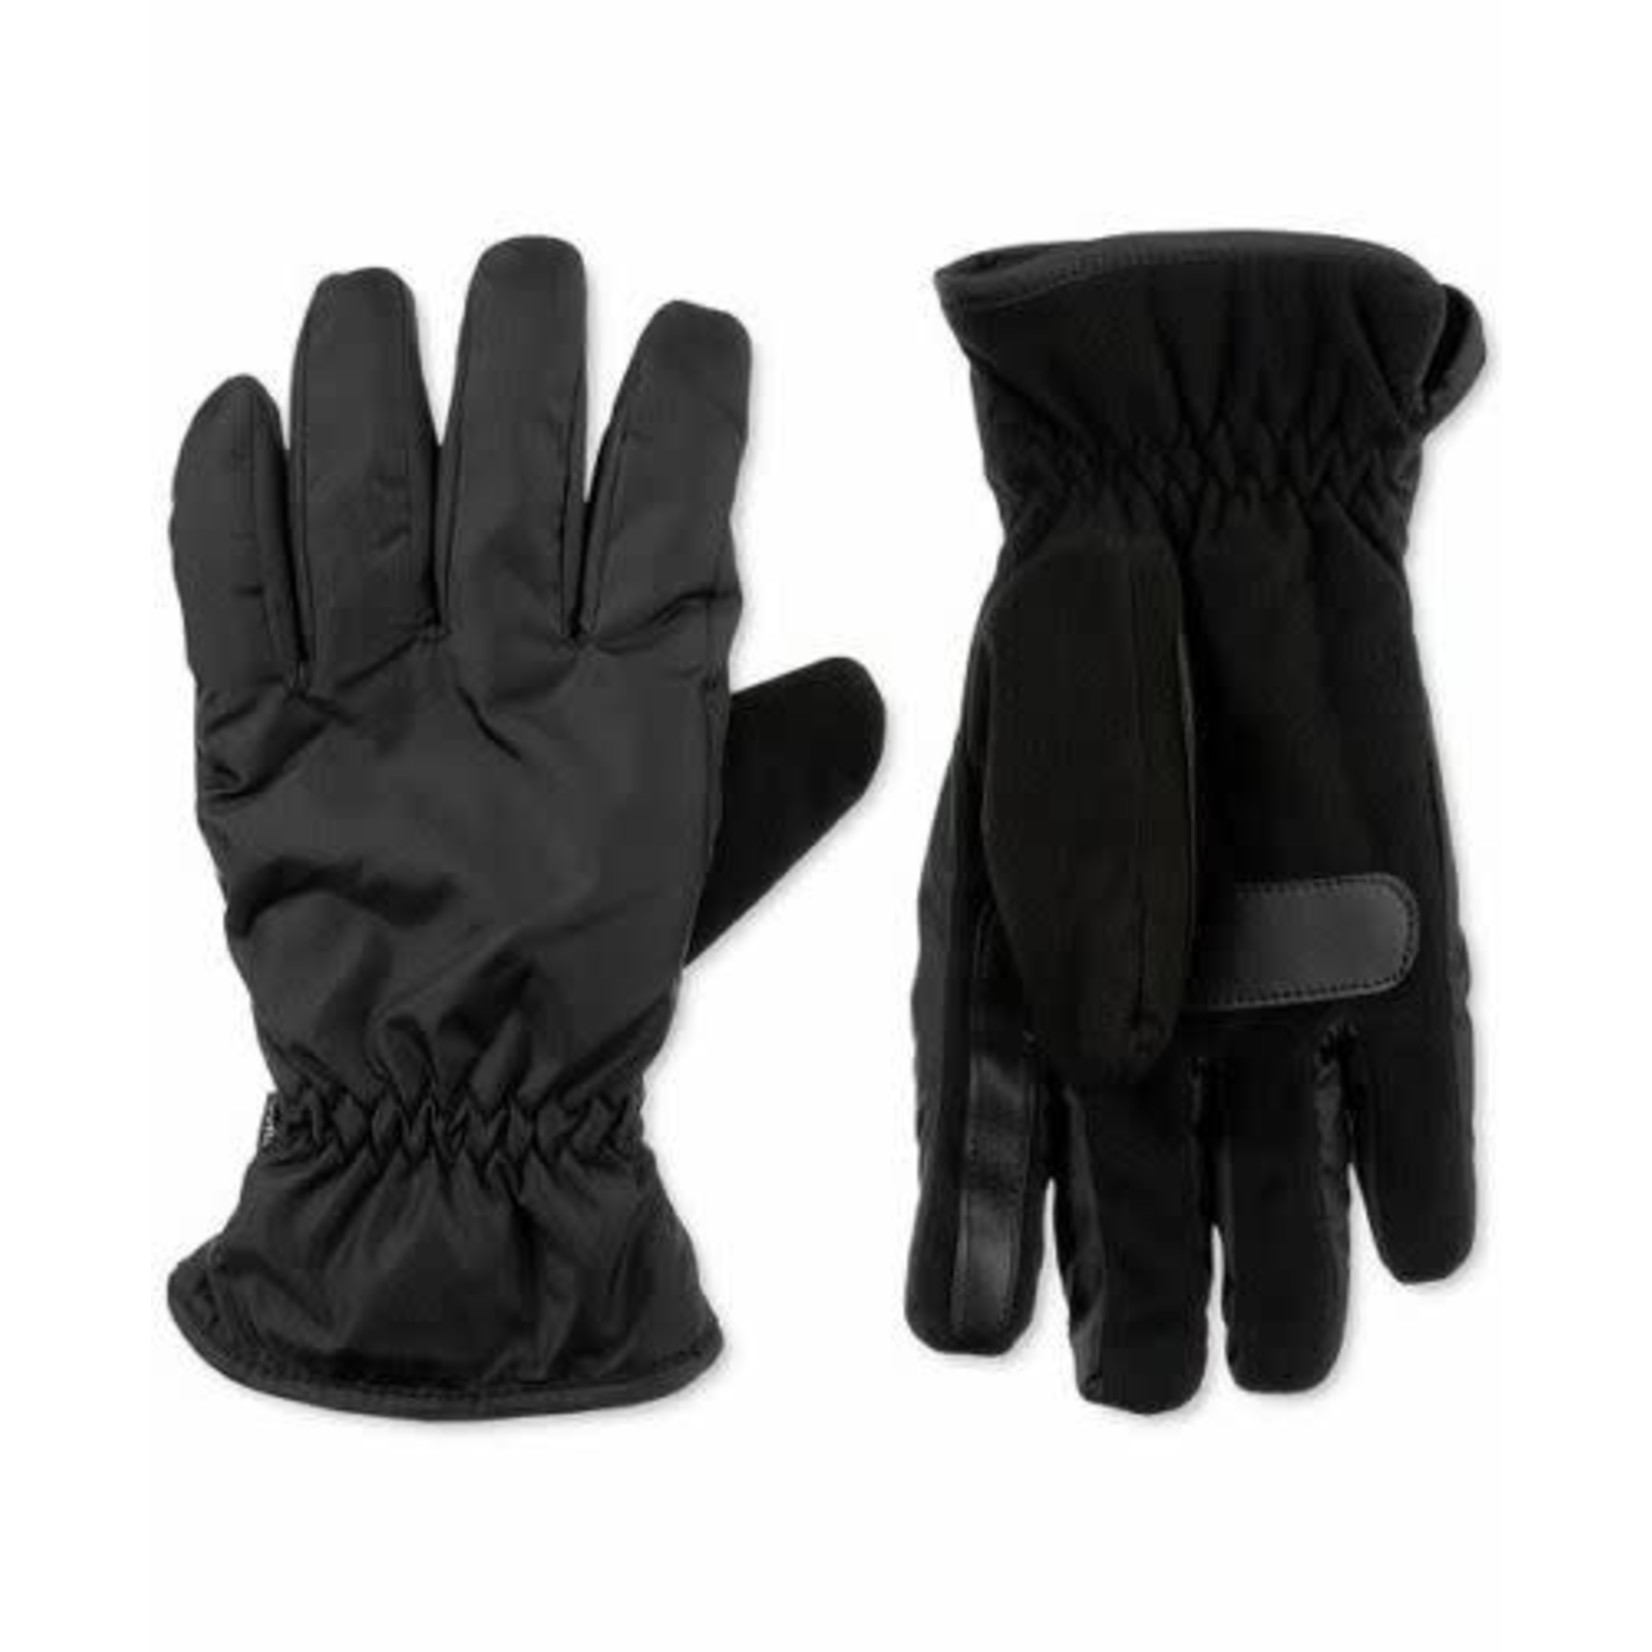 Isotoner Isotoner Men's Smartdri Touch-screen Sleek Heat Gloves, XL